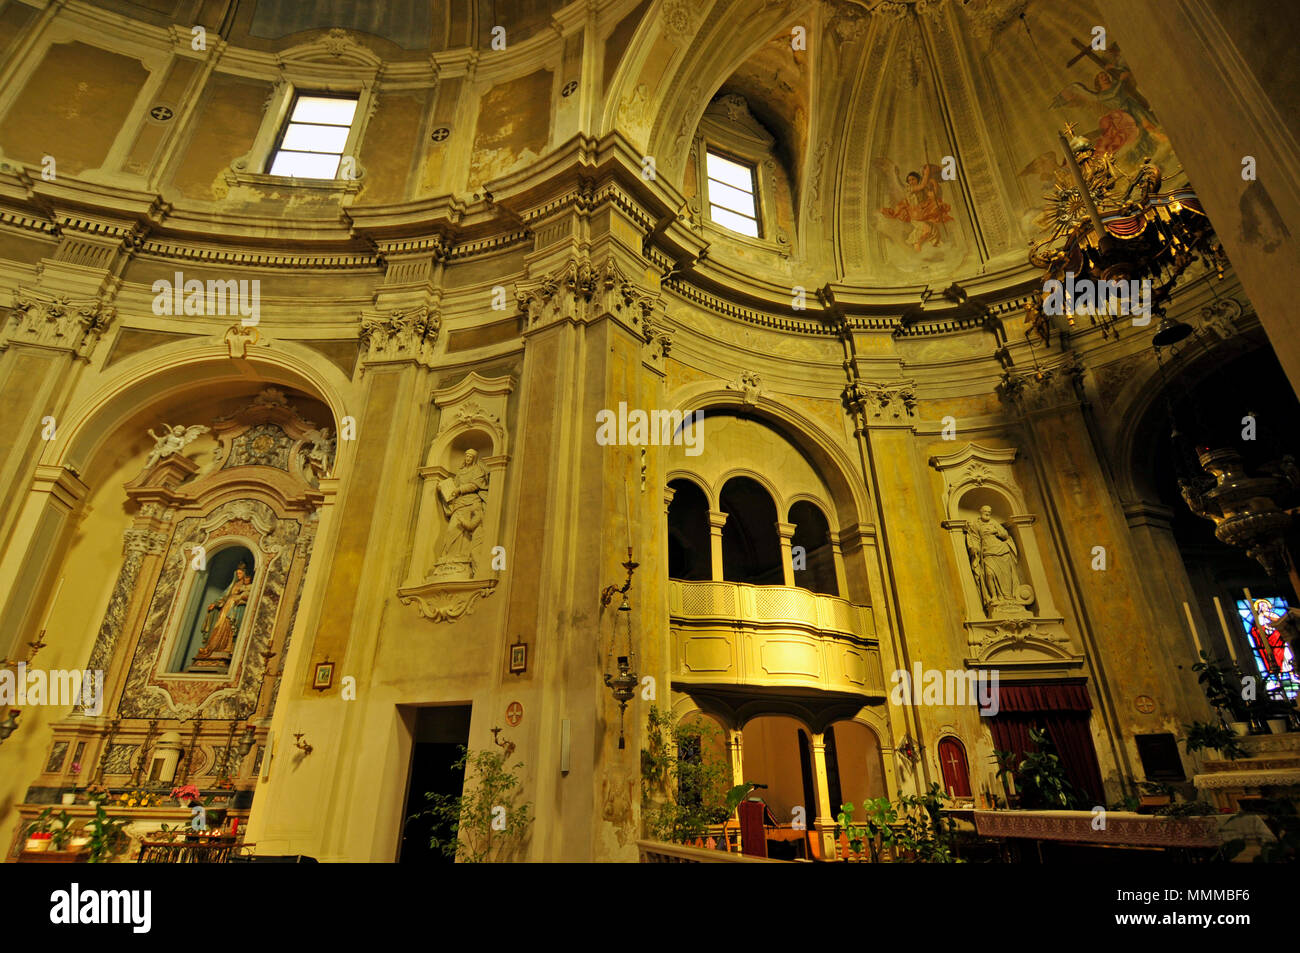 Interior view of the Church of St. Anthony Martyr, Piazza Guglielmo Marconi, Ficarolo, Rovigo, Italy Stock Photo